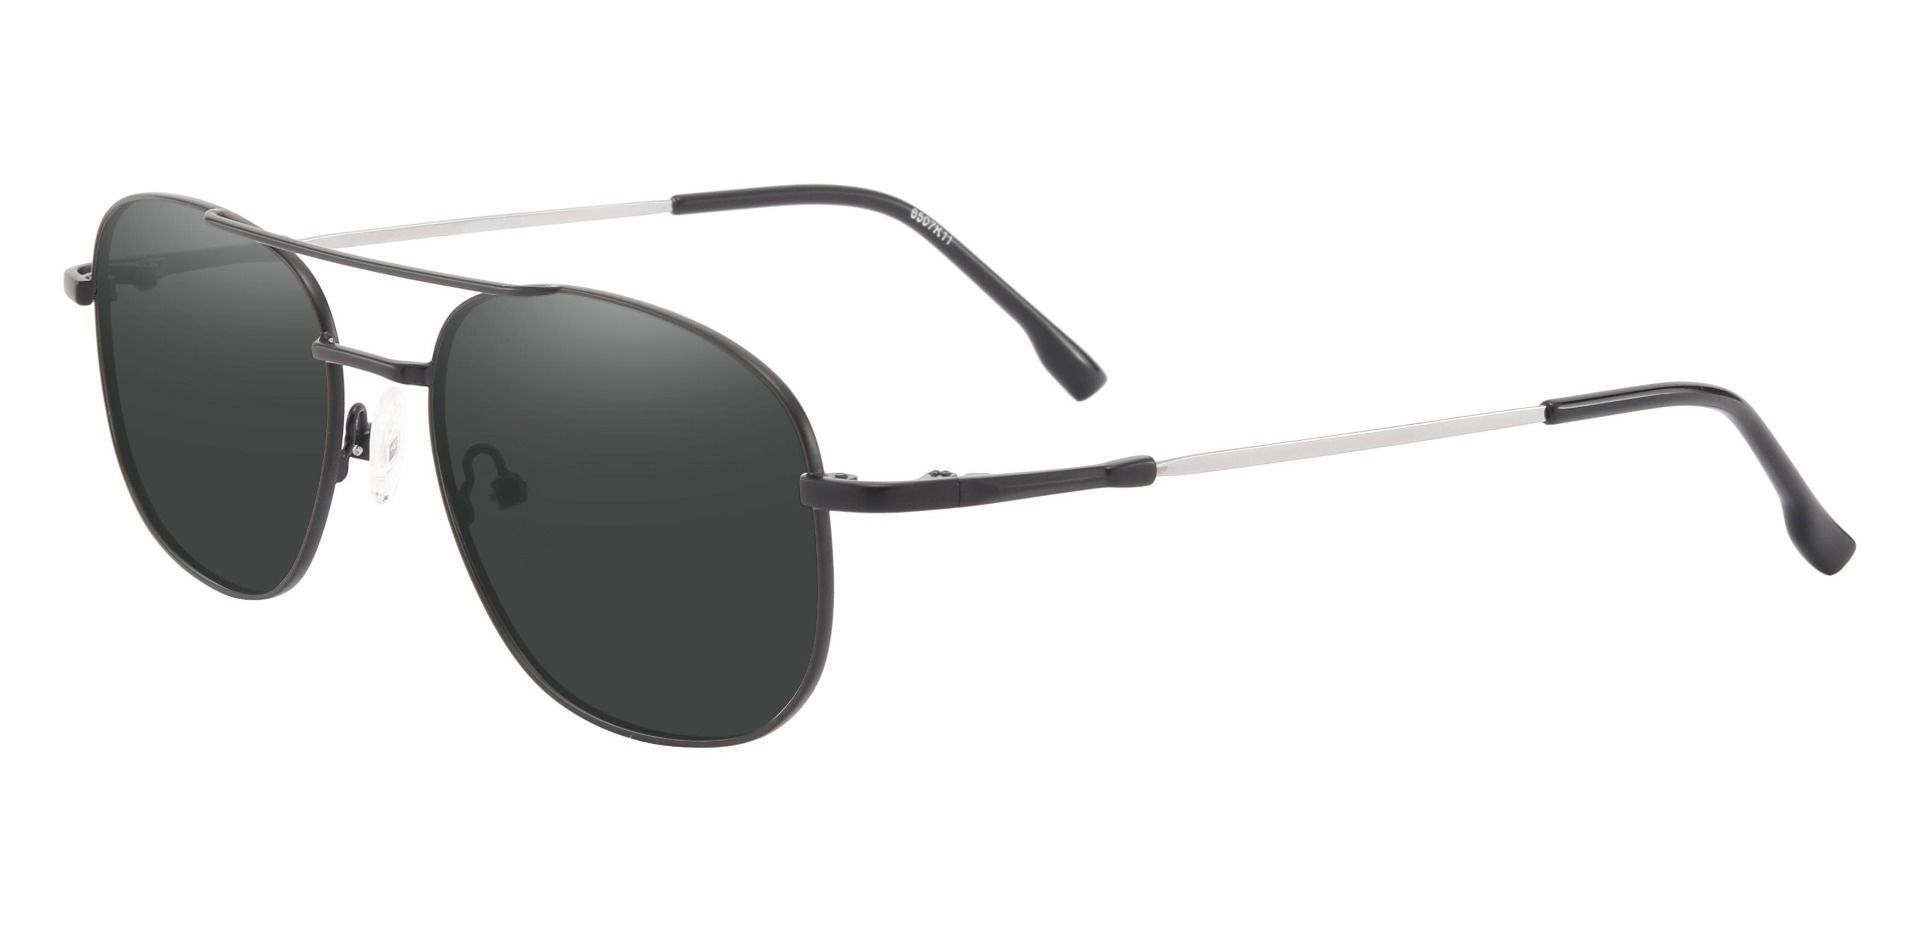 Jamison Aviator Prescription Sunglasses - Black Frame With Gray Lenses